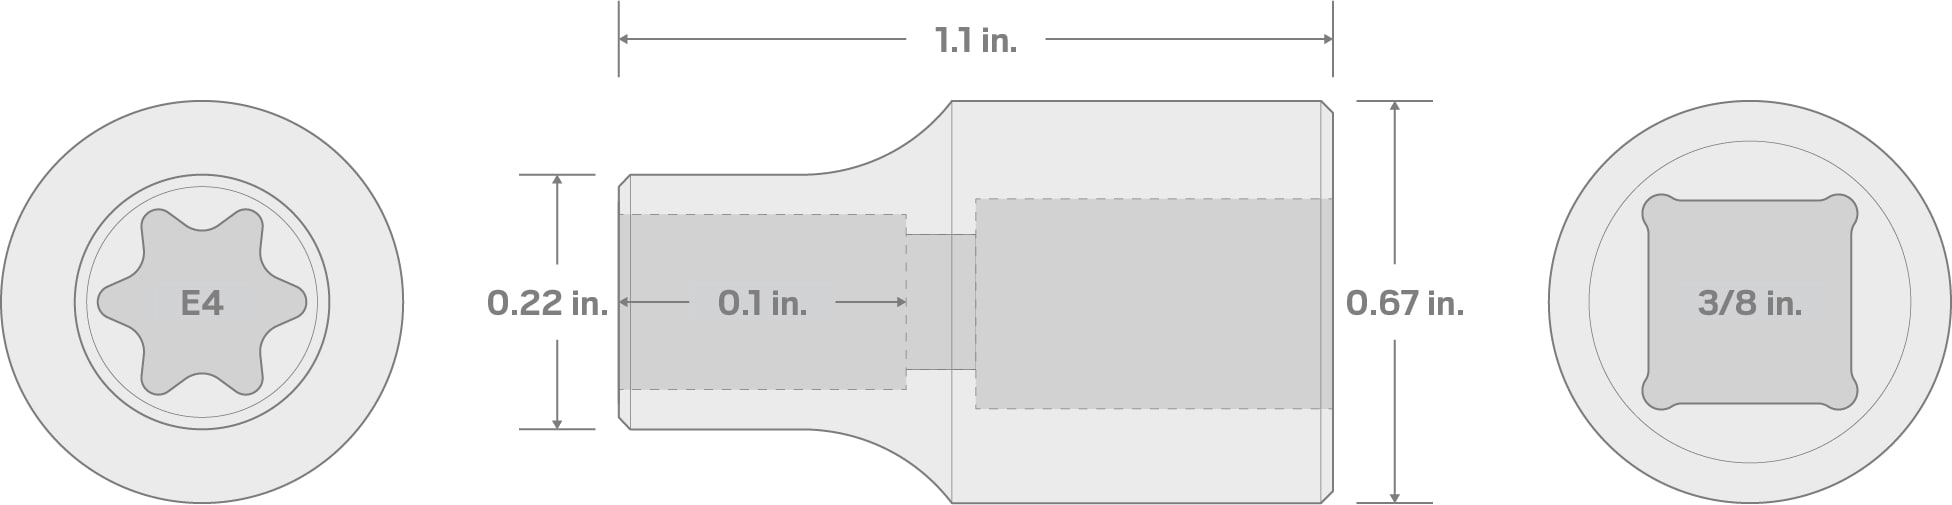 Specs for 3/8 Inch Drive x E4 External Star Socket